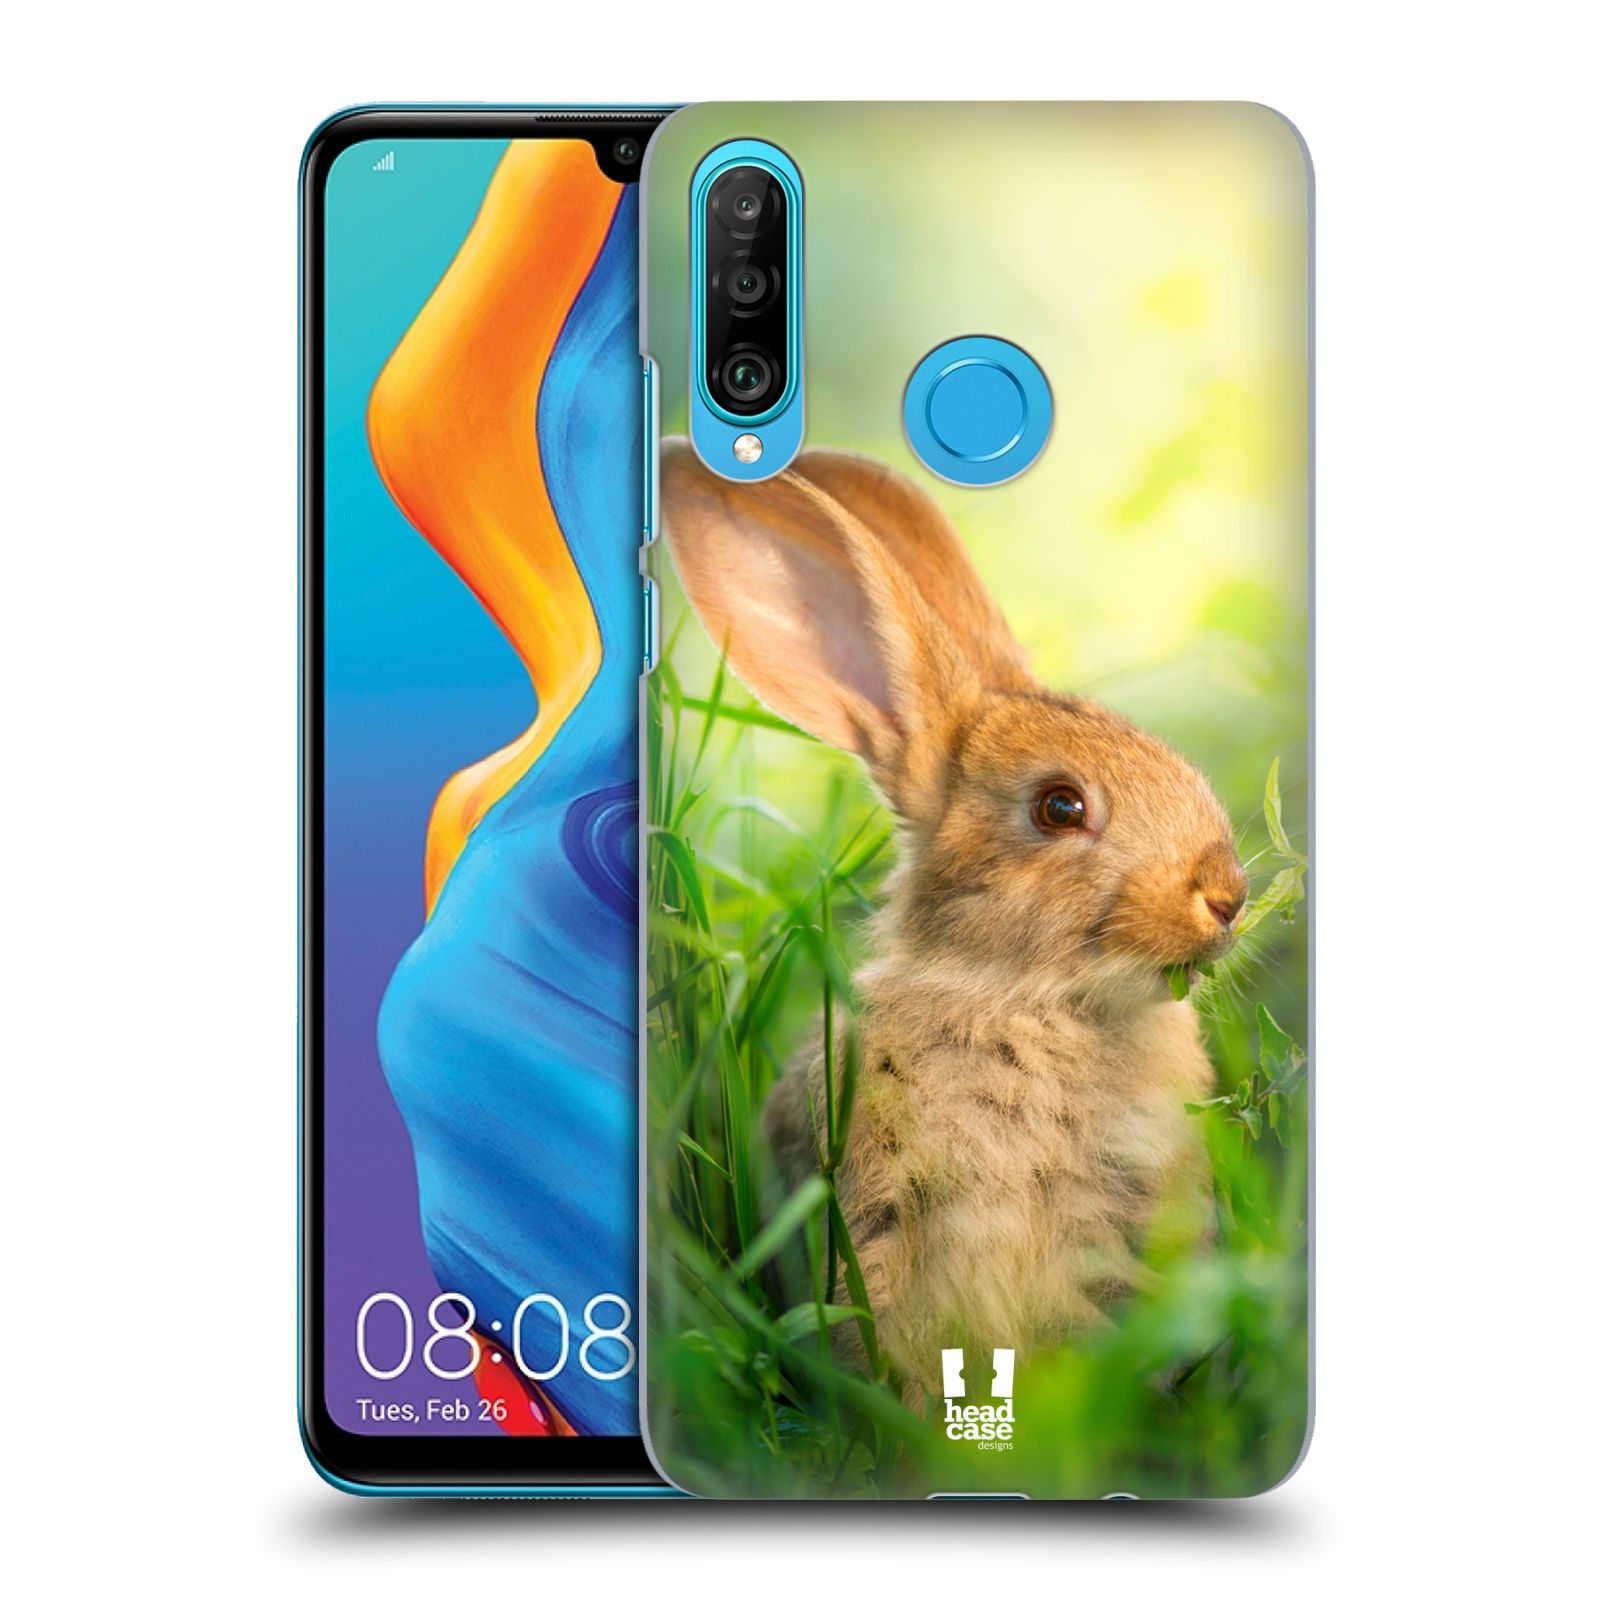 Pouzdro na mobil Huawei P30 LITE - HEAD CASE - vzor Divočina, Divoký život a zvířata foto ZAJÍČEK V TRÁVĚ ZELENÁ